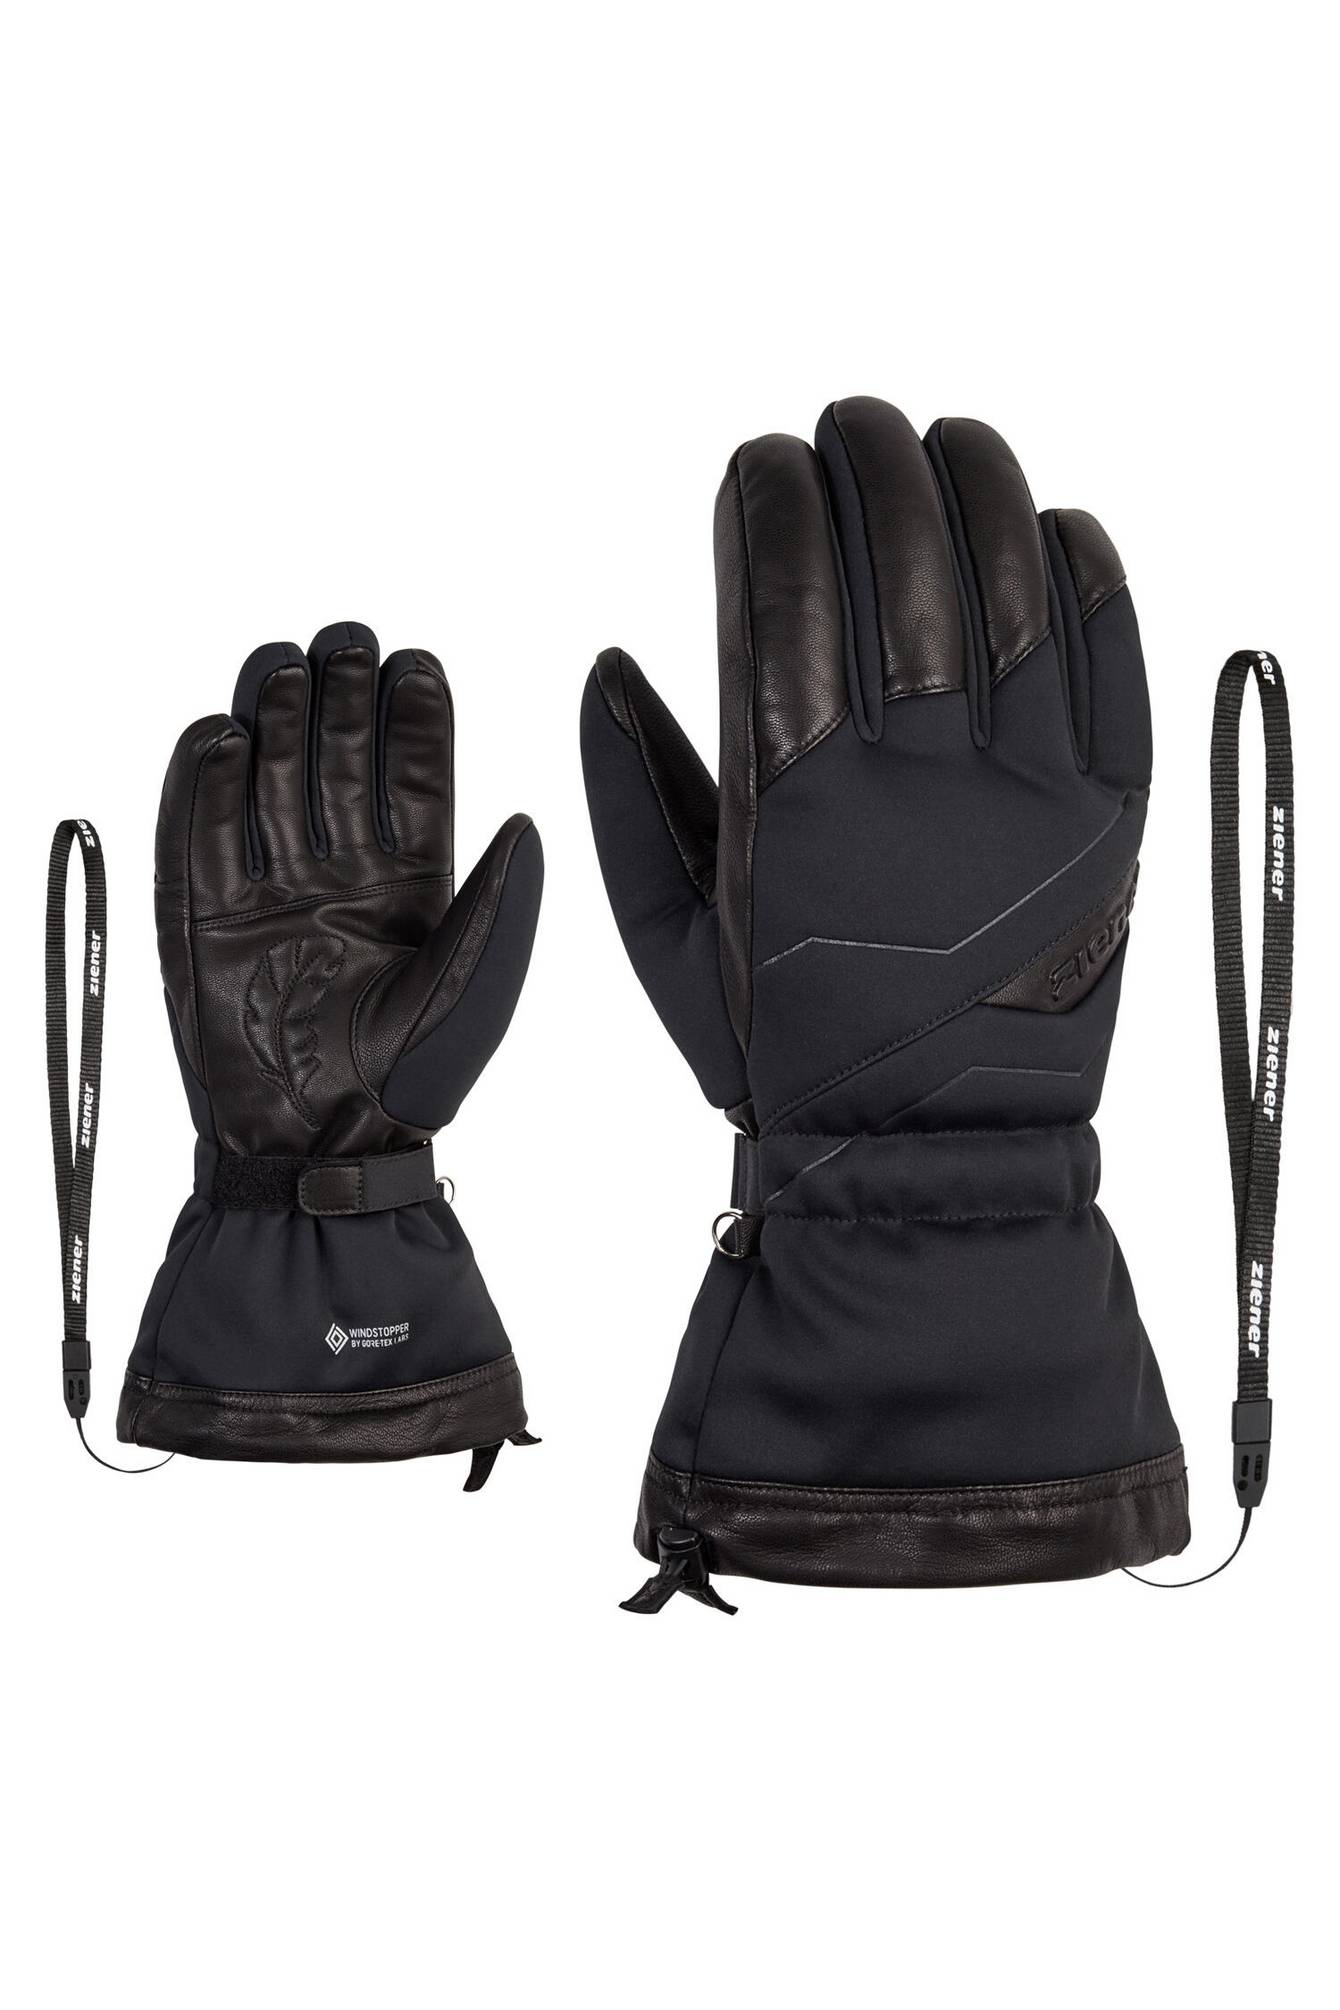 ski WS alpine glove | GANNO L&T